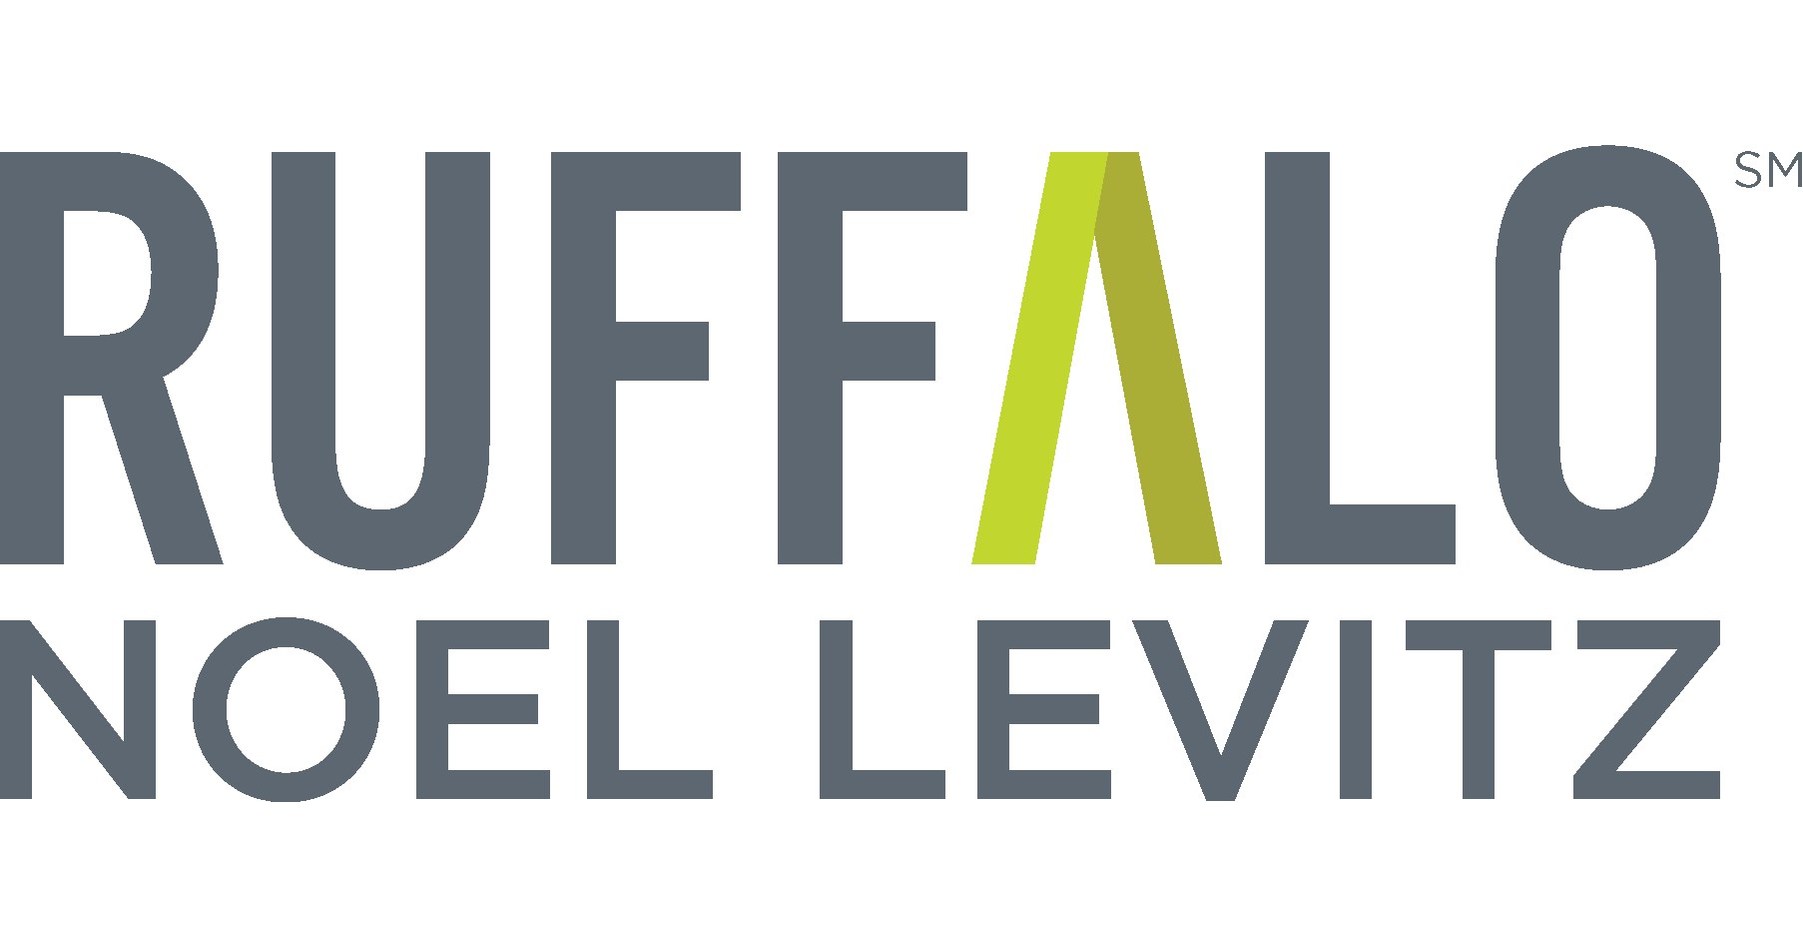 Study Group and Ruffalo Noel Levitz Announce Strategic Partnership